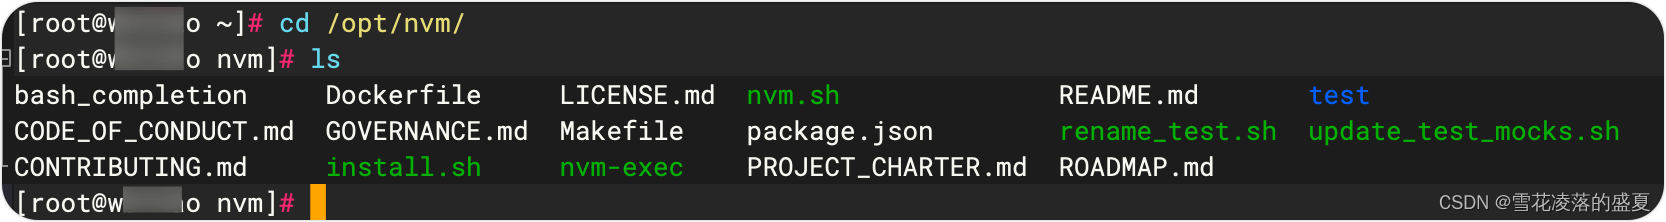 Linux 安装 nvm，并使用 Jenkins 打包前端